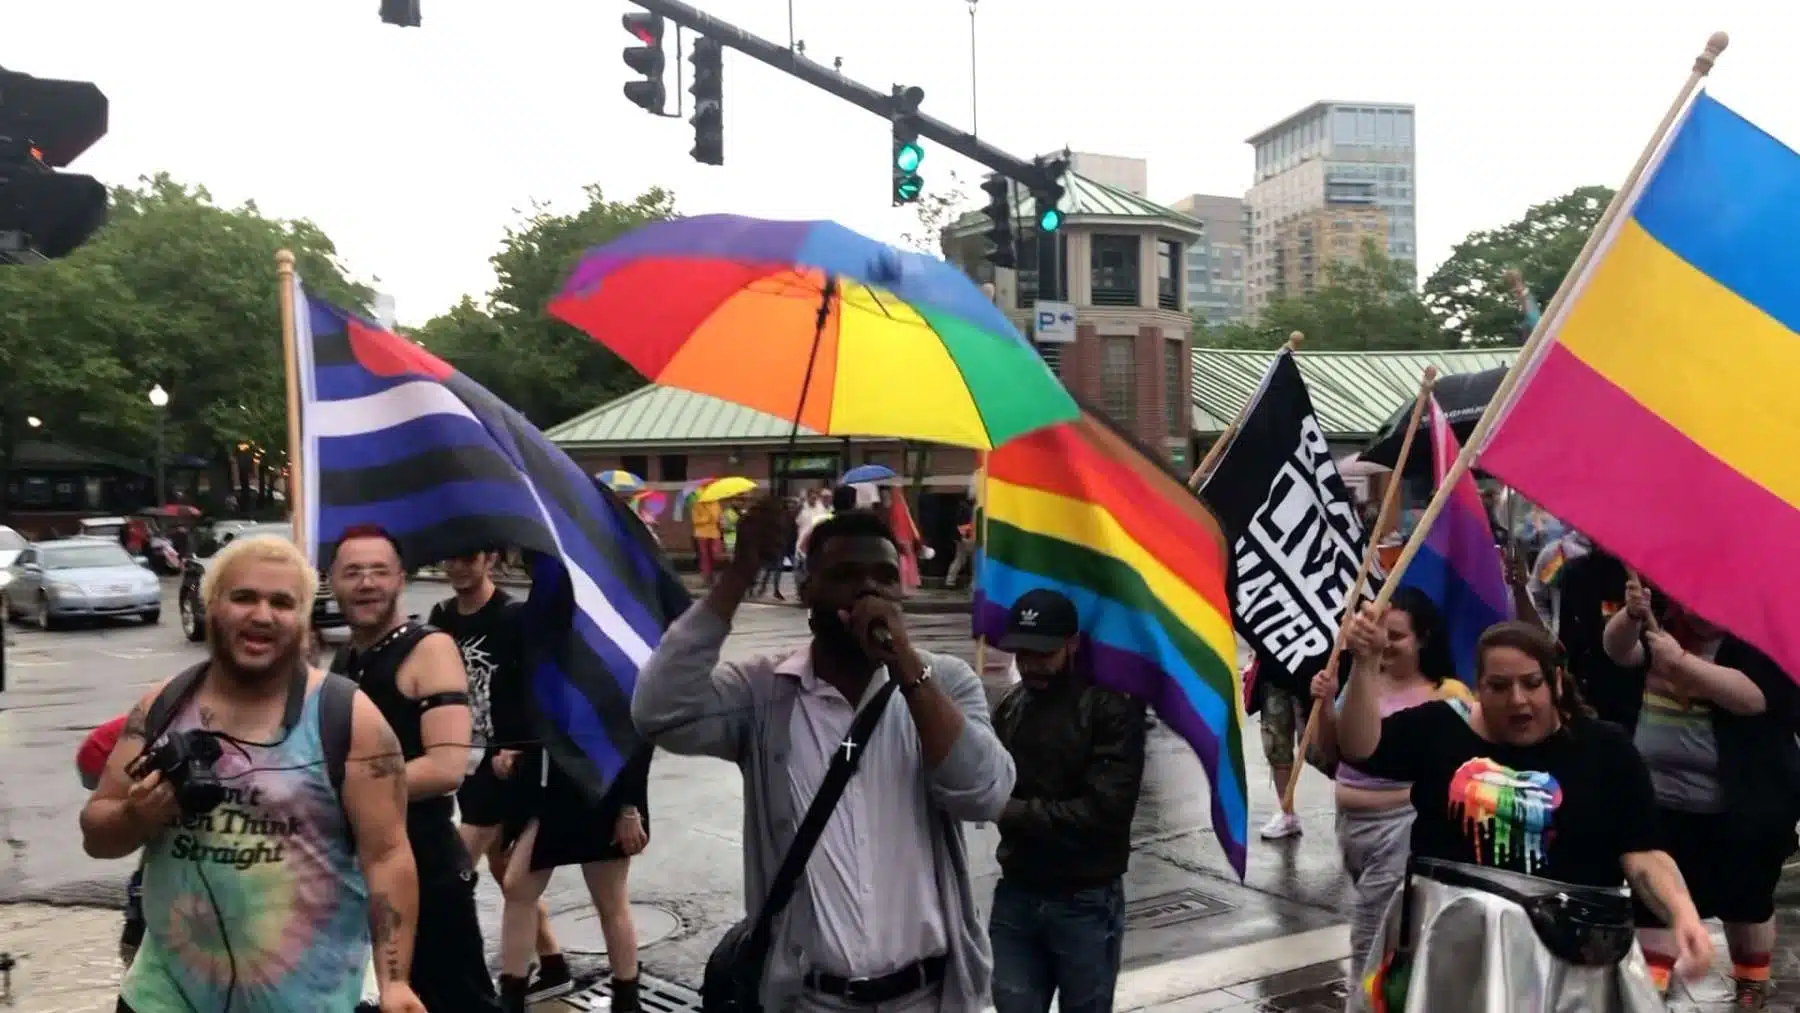 Rhode Island News: Providence Pride Flag raising was no small celebration